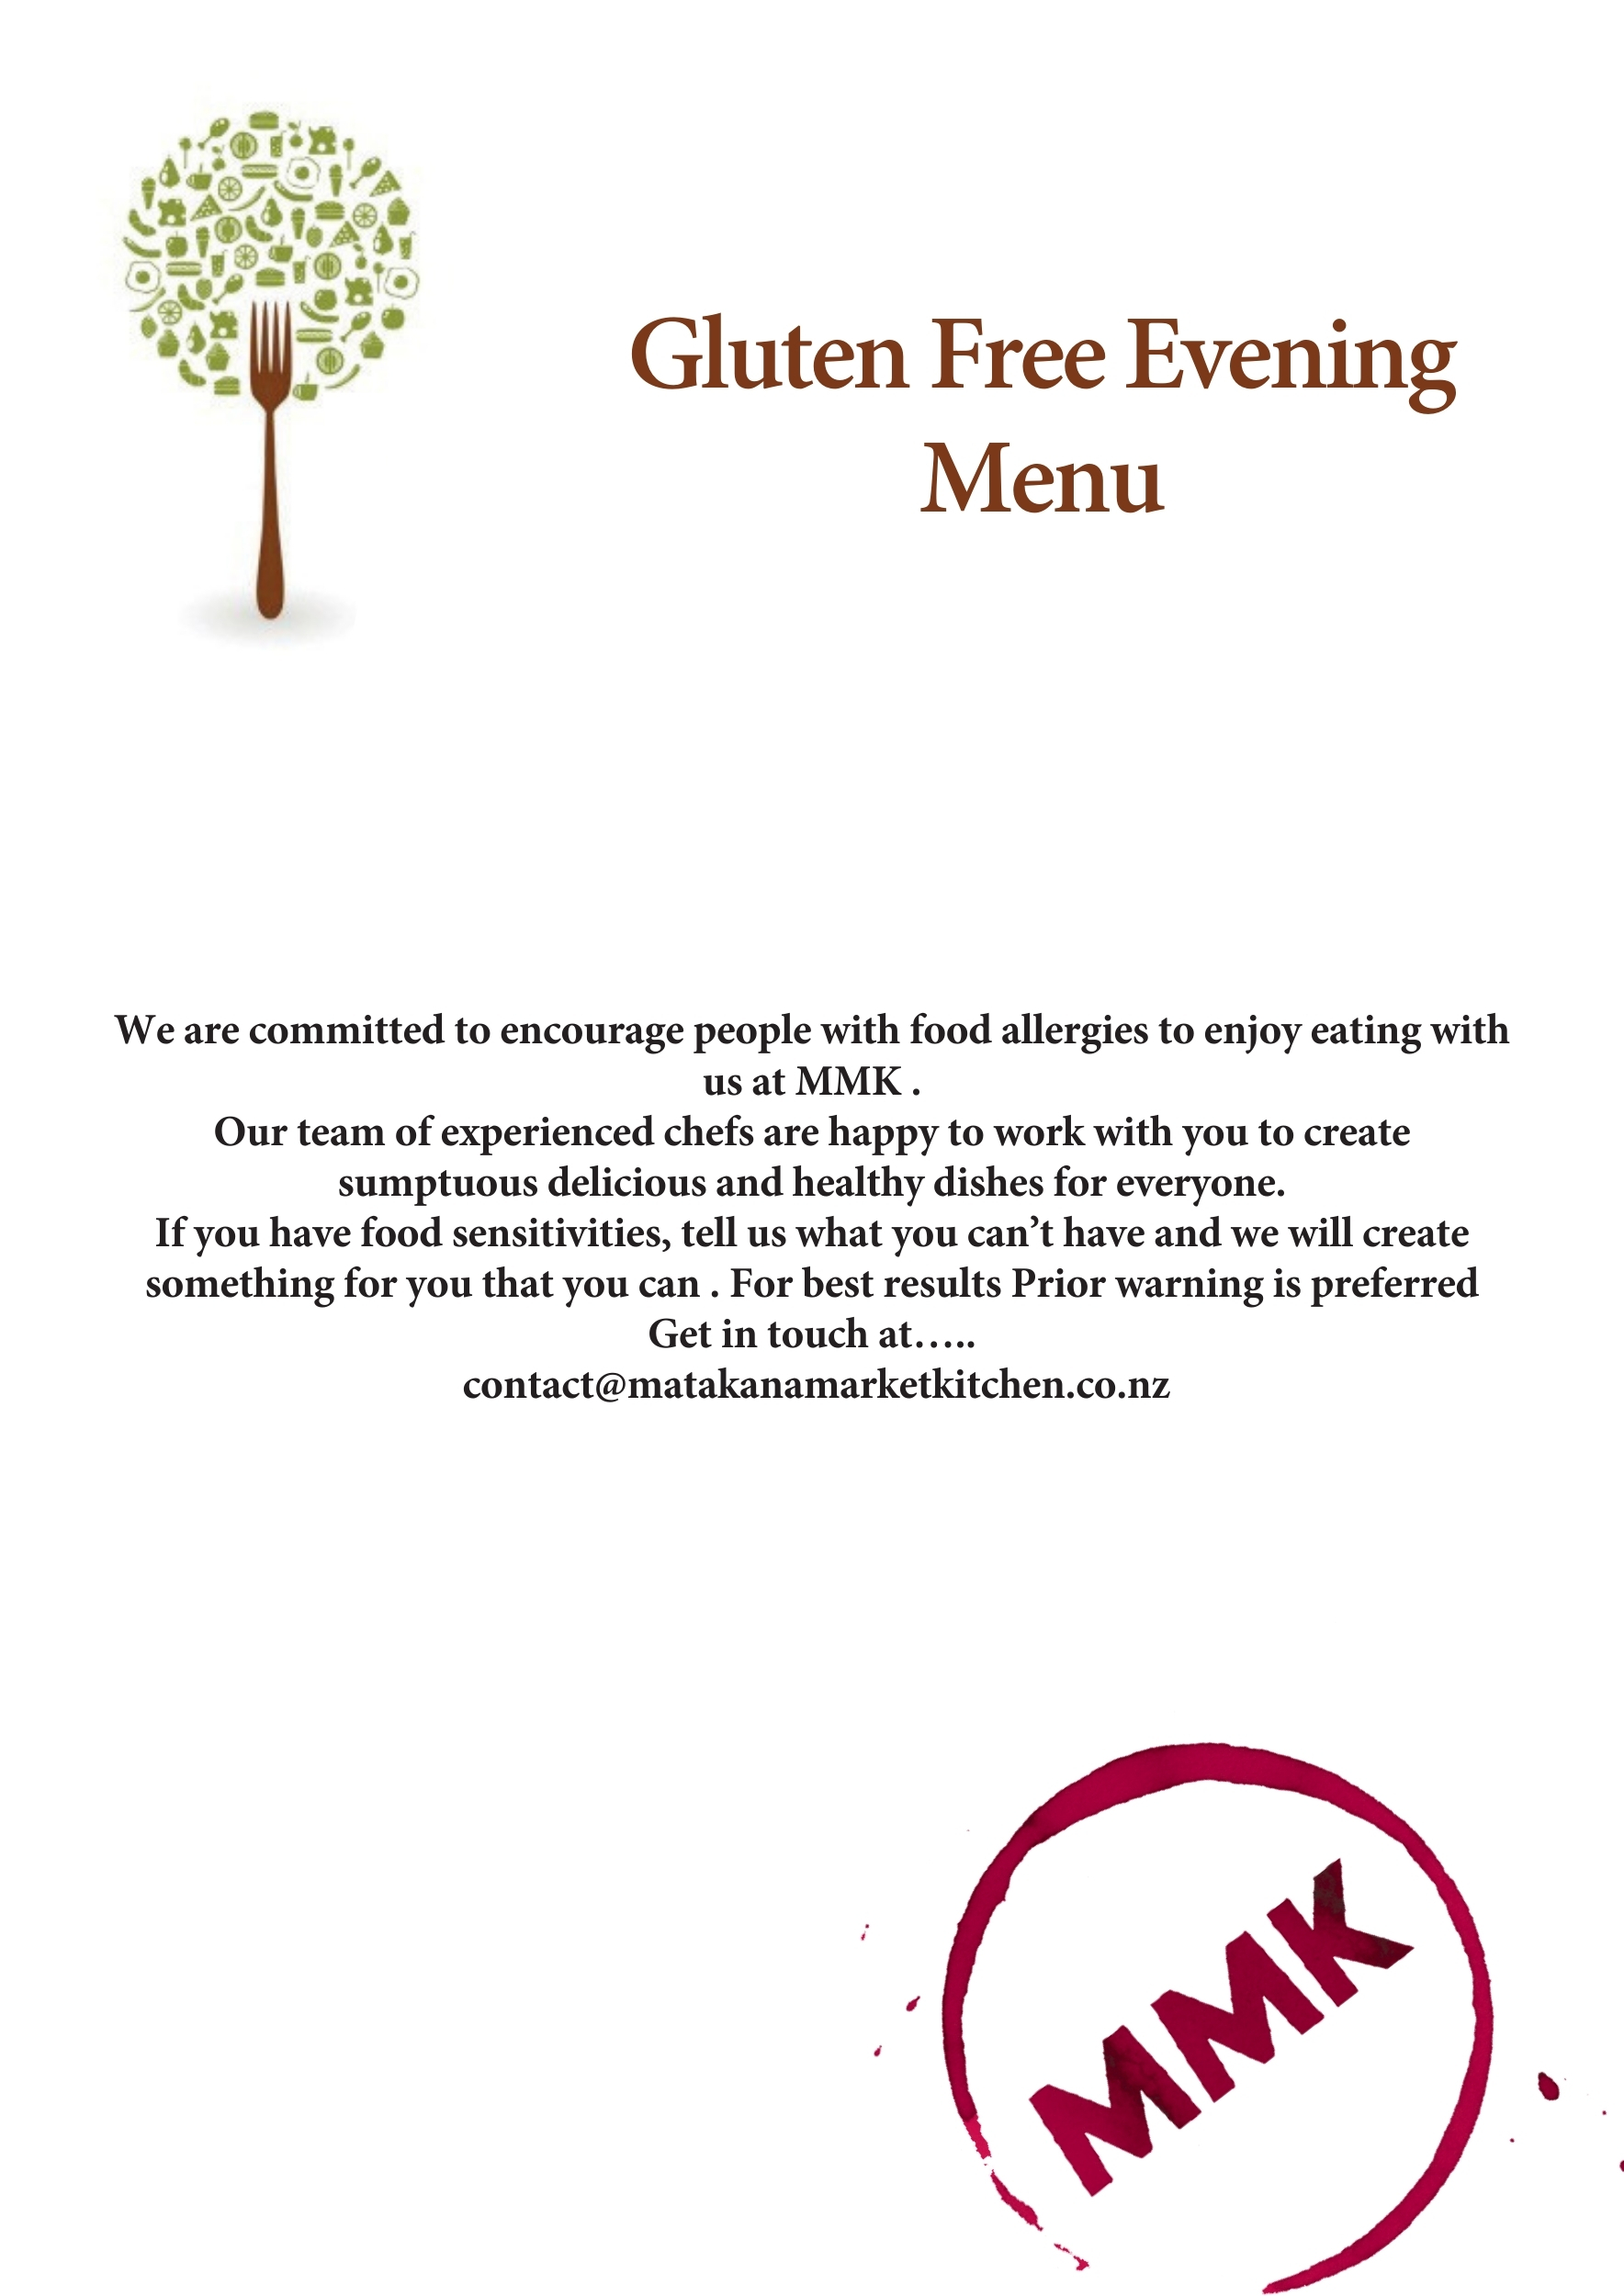 Matakana Market kitchen gluten friendly evening menu page 1